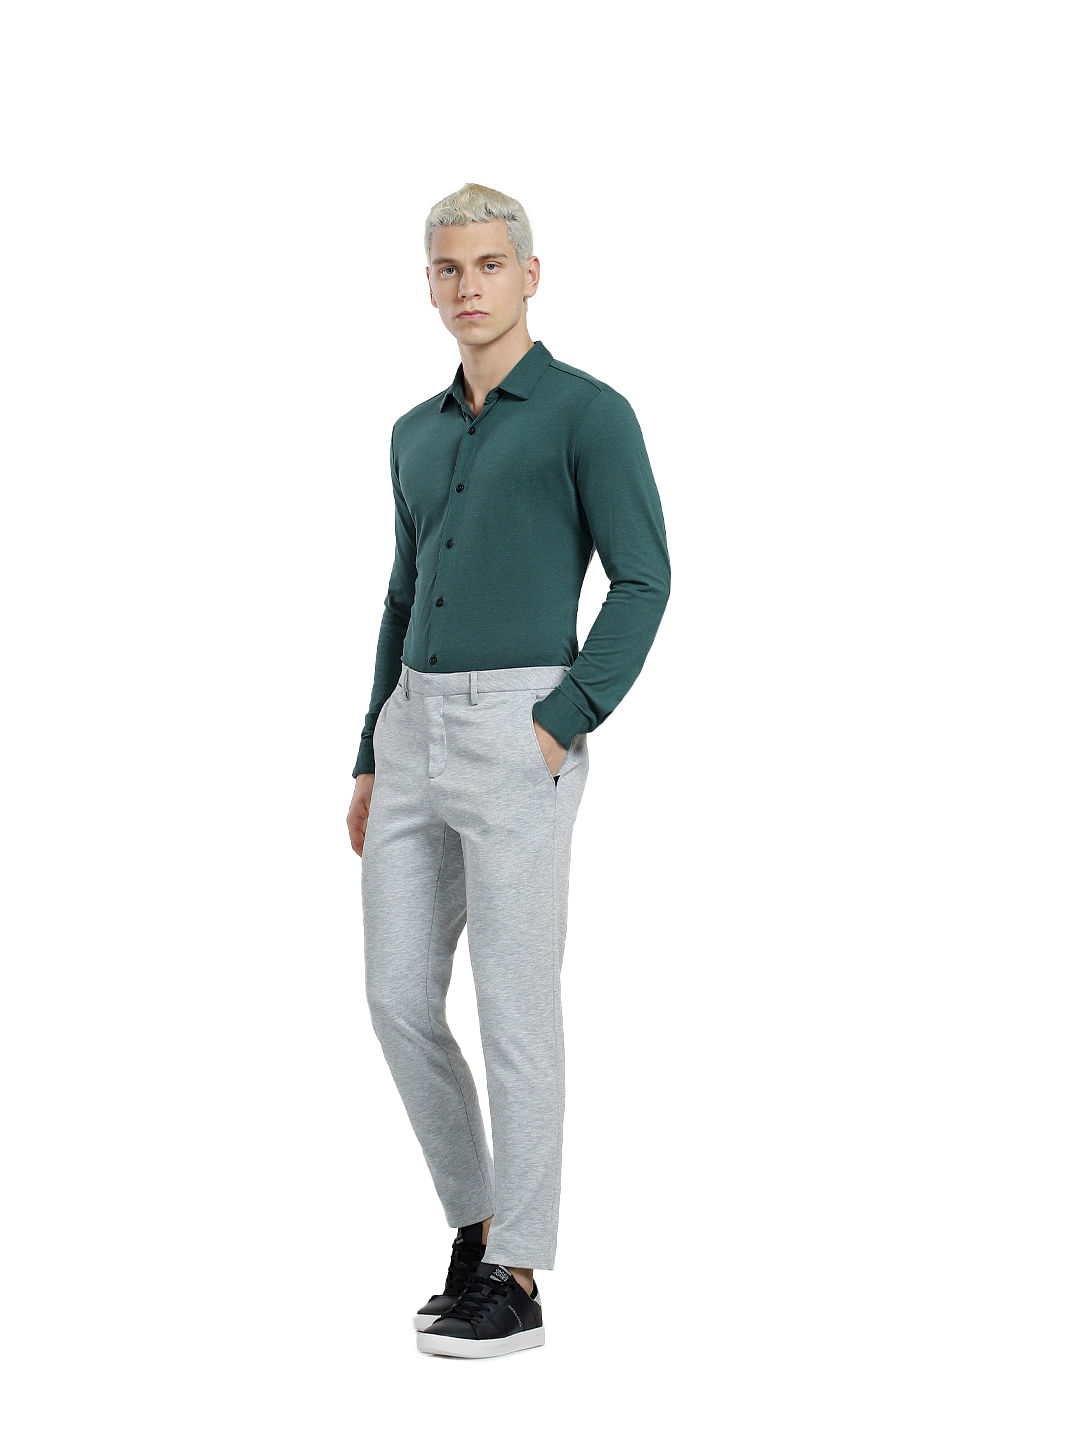 Green Short Sleeve Shirt with Brown Pants | Hockerty